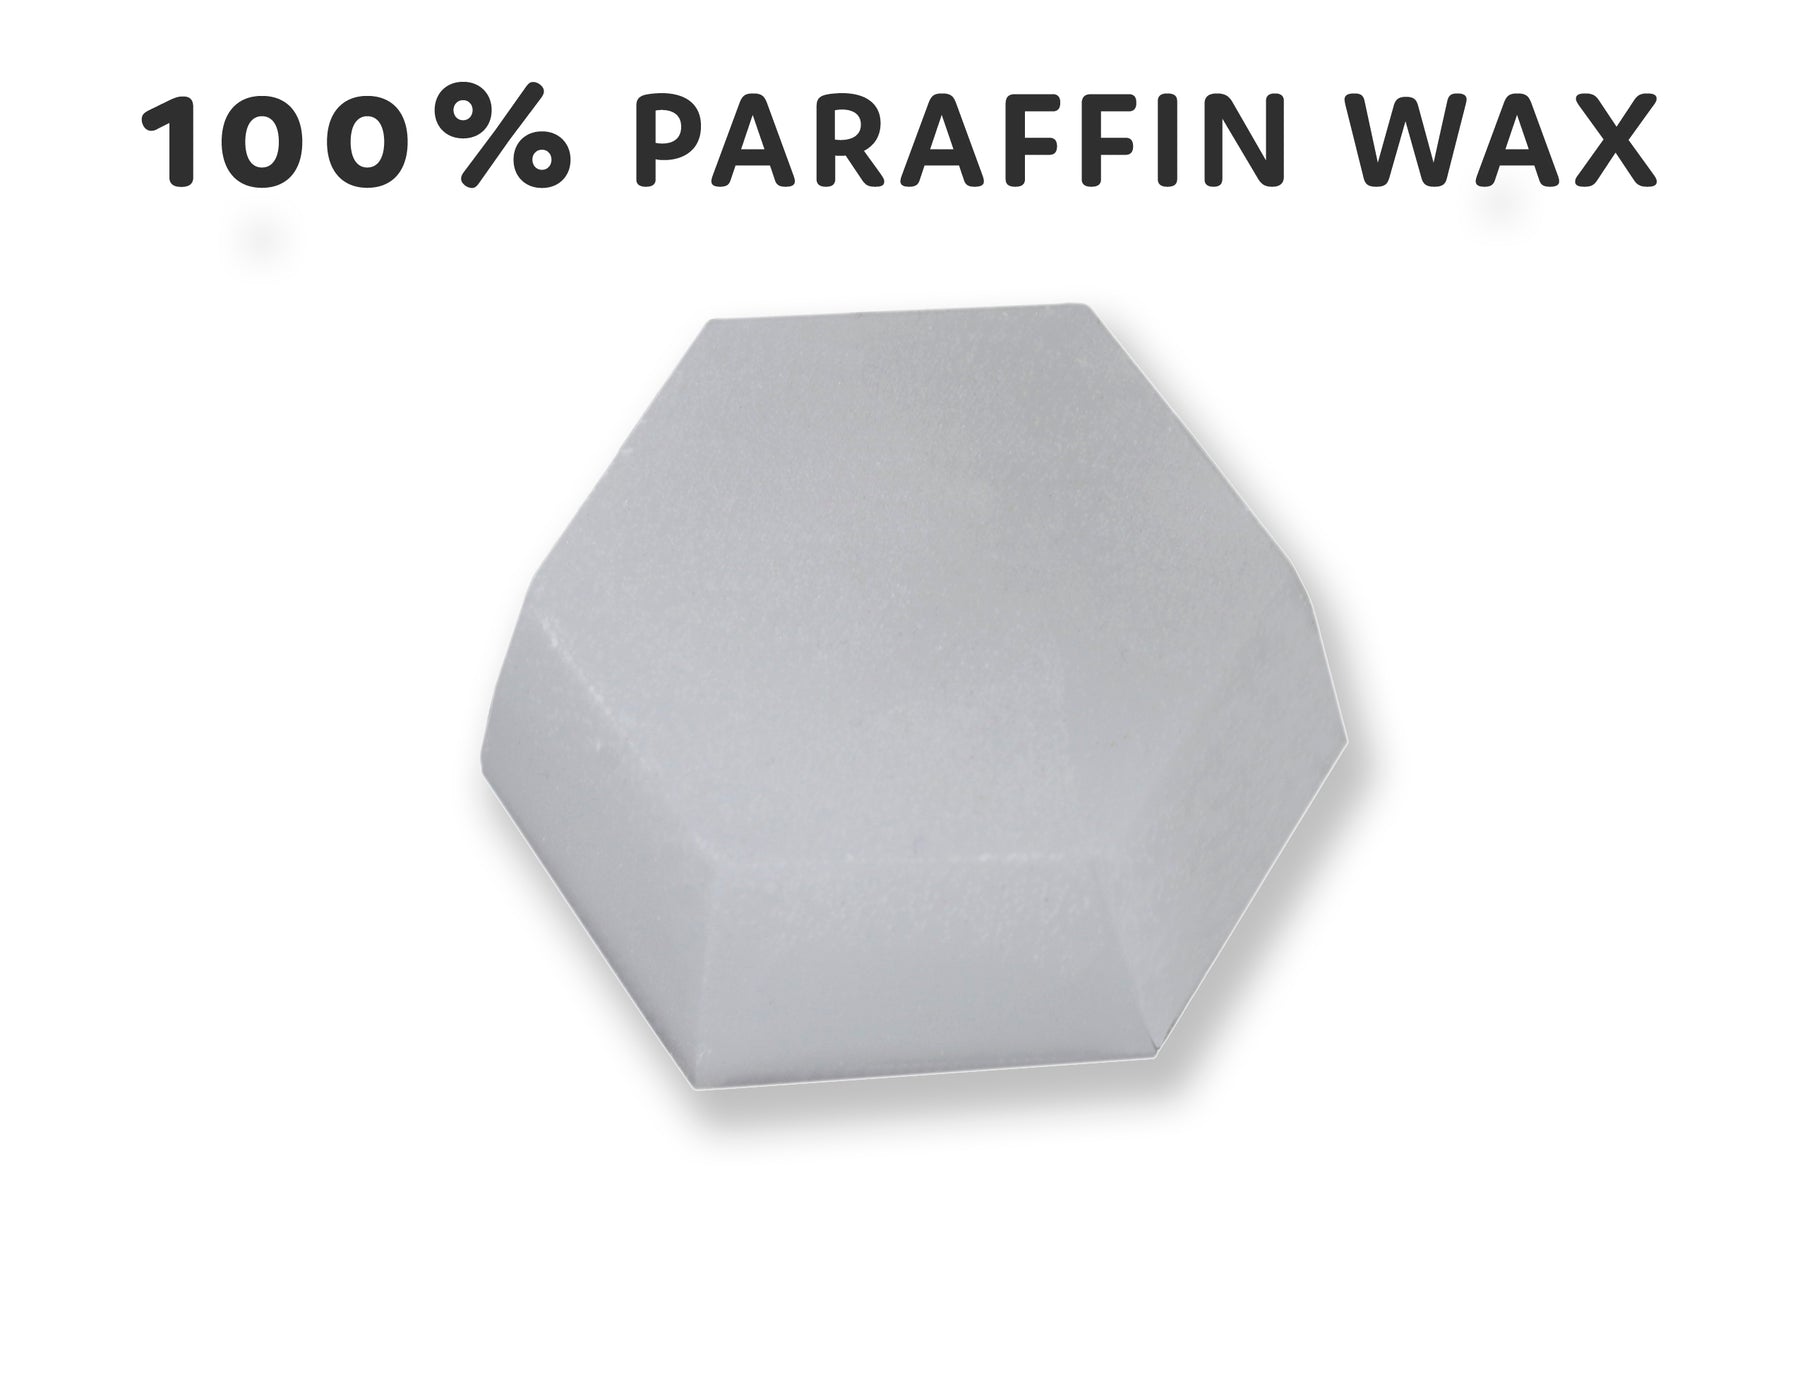 Paraffin Wax Block - Superior Blend, Versatile & Effective - 1lb. - 2 Blocks